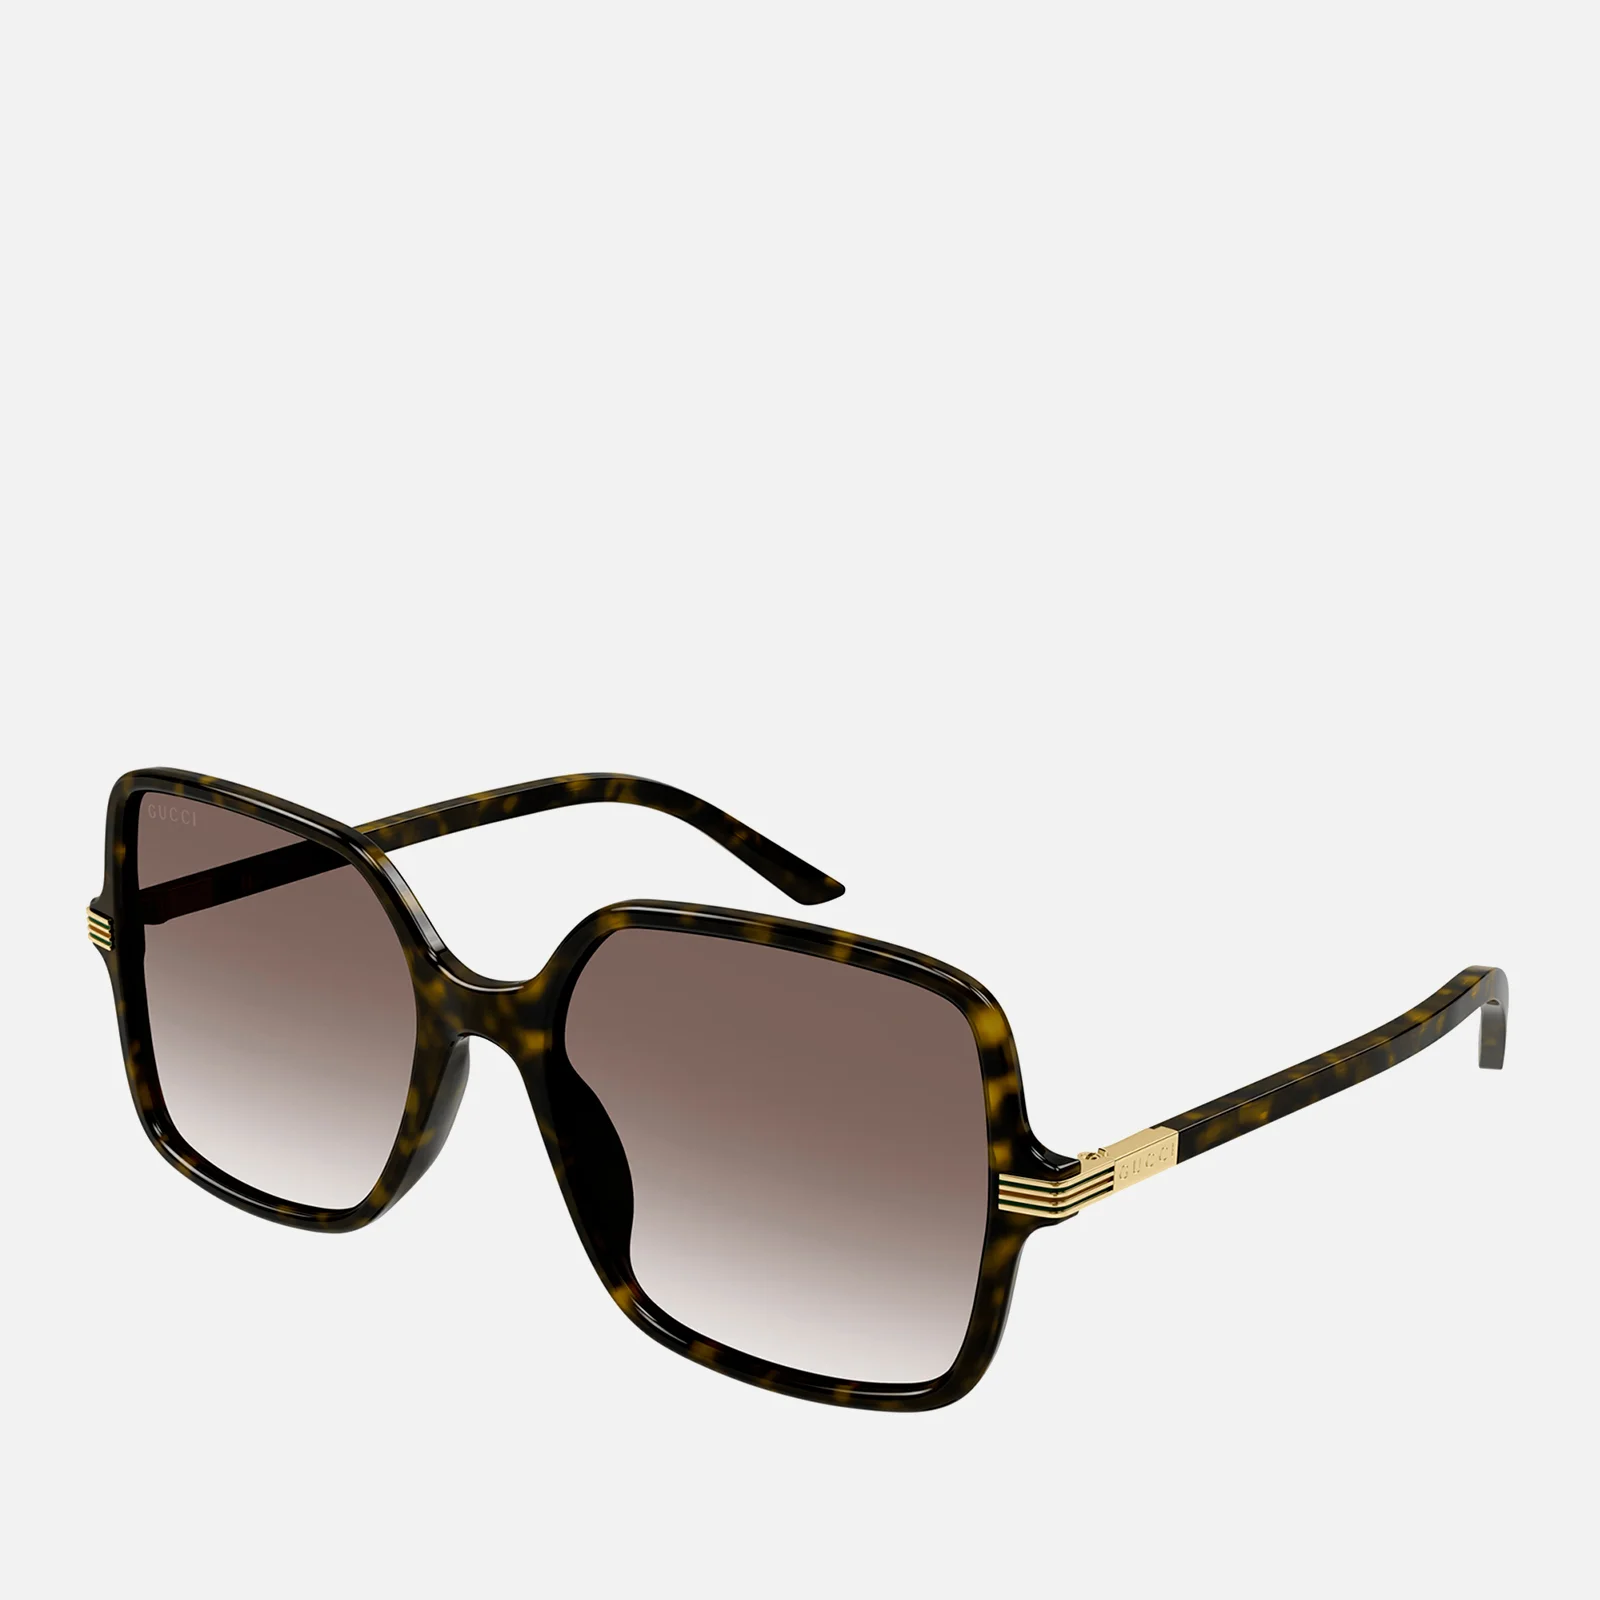 Gucci Square Frame Acetate Sunglasses - Havana Image 1